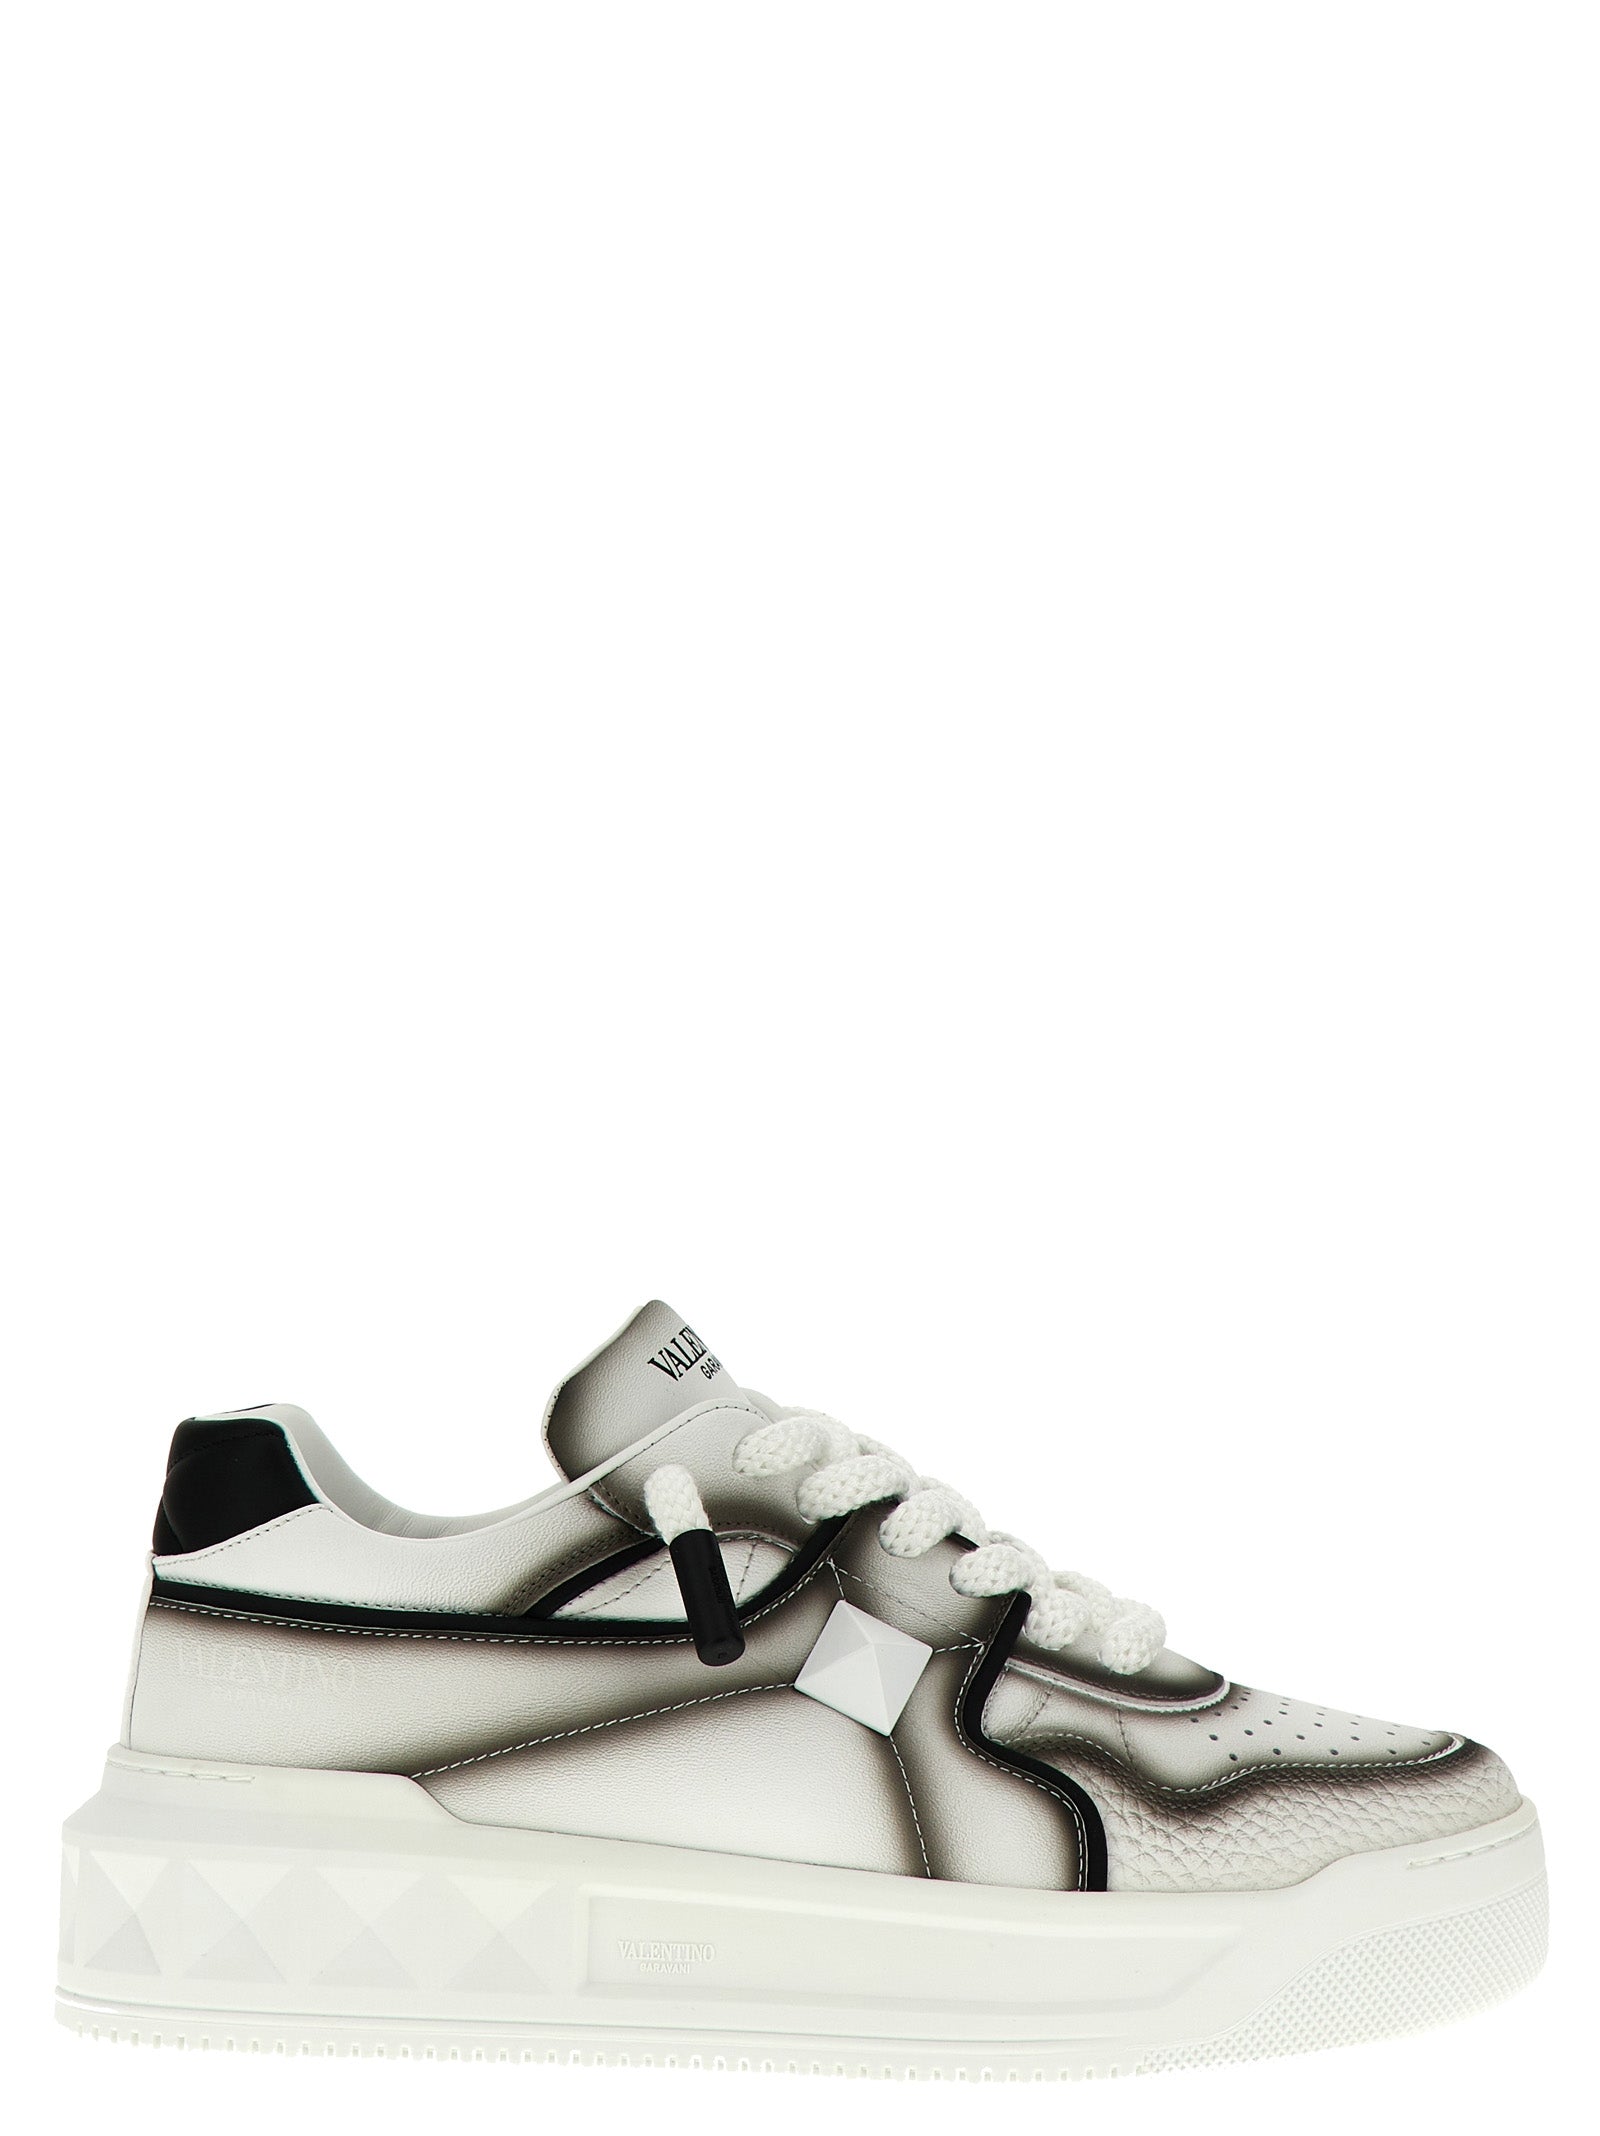 Shop Valentino One Stud Xl Sneakers White/black